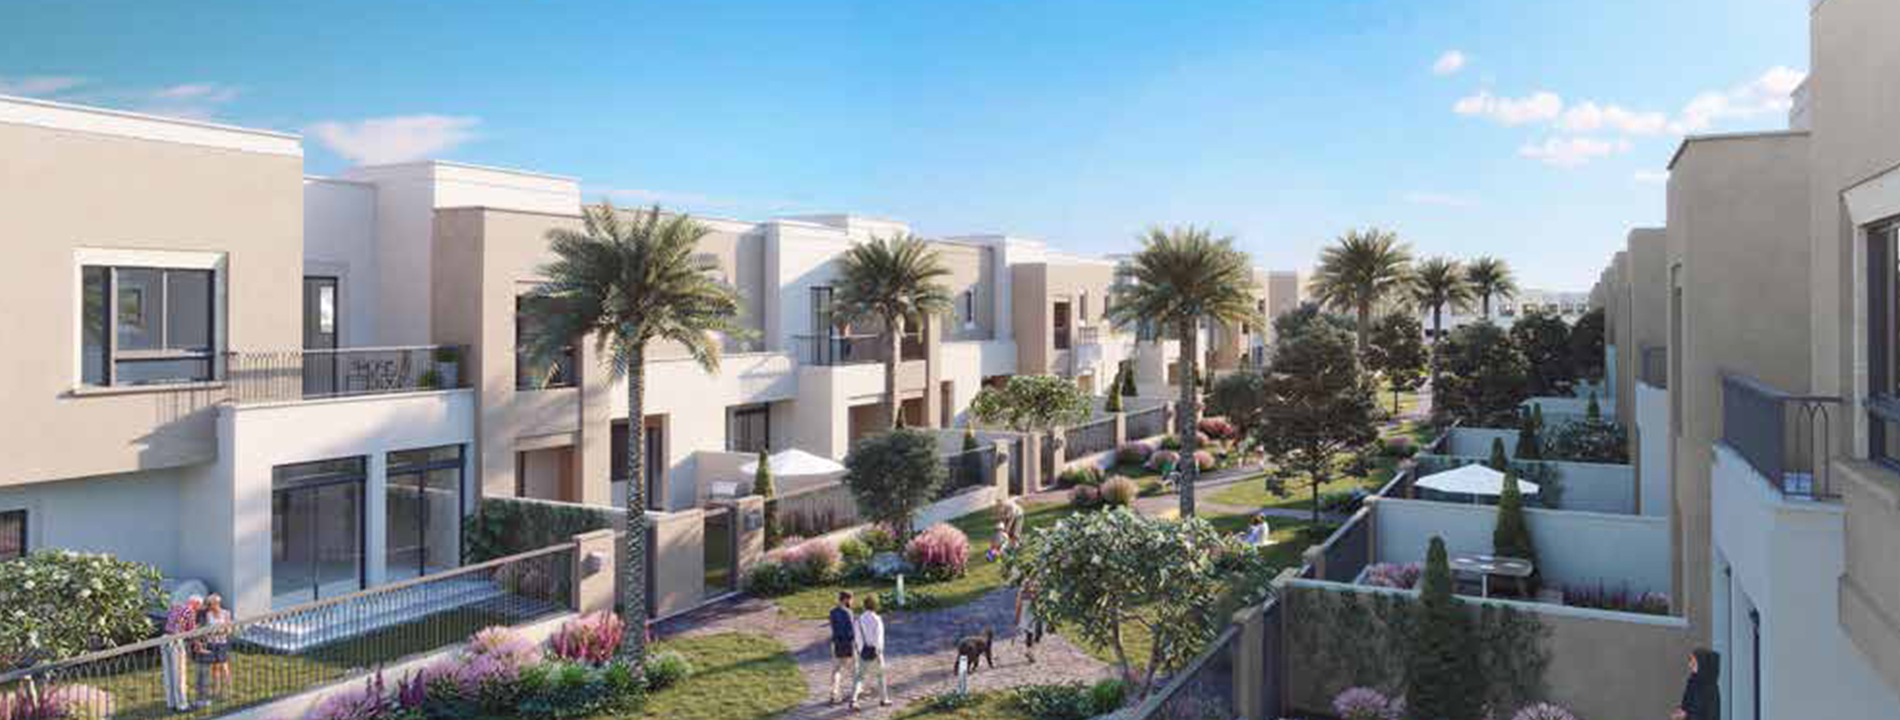 REEM TOWNHOUSES AT TOWN SQUARE DUBAI BY NSHAMA